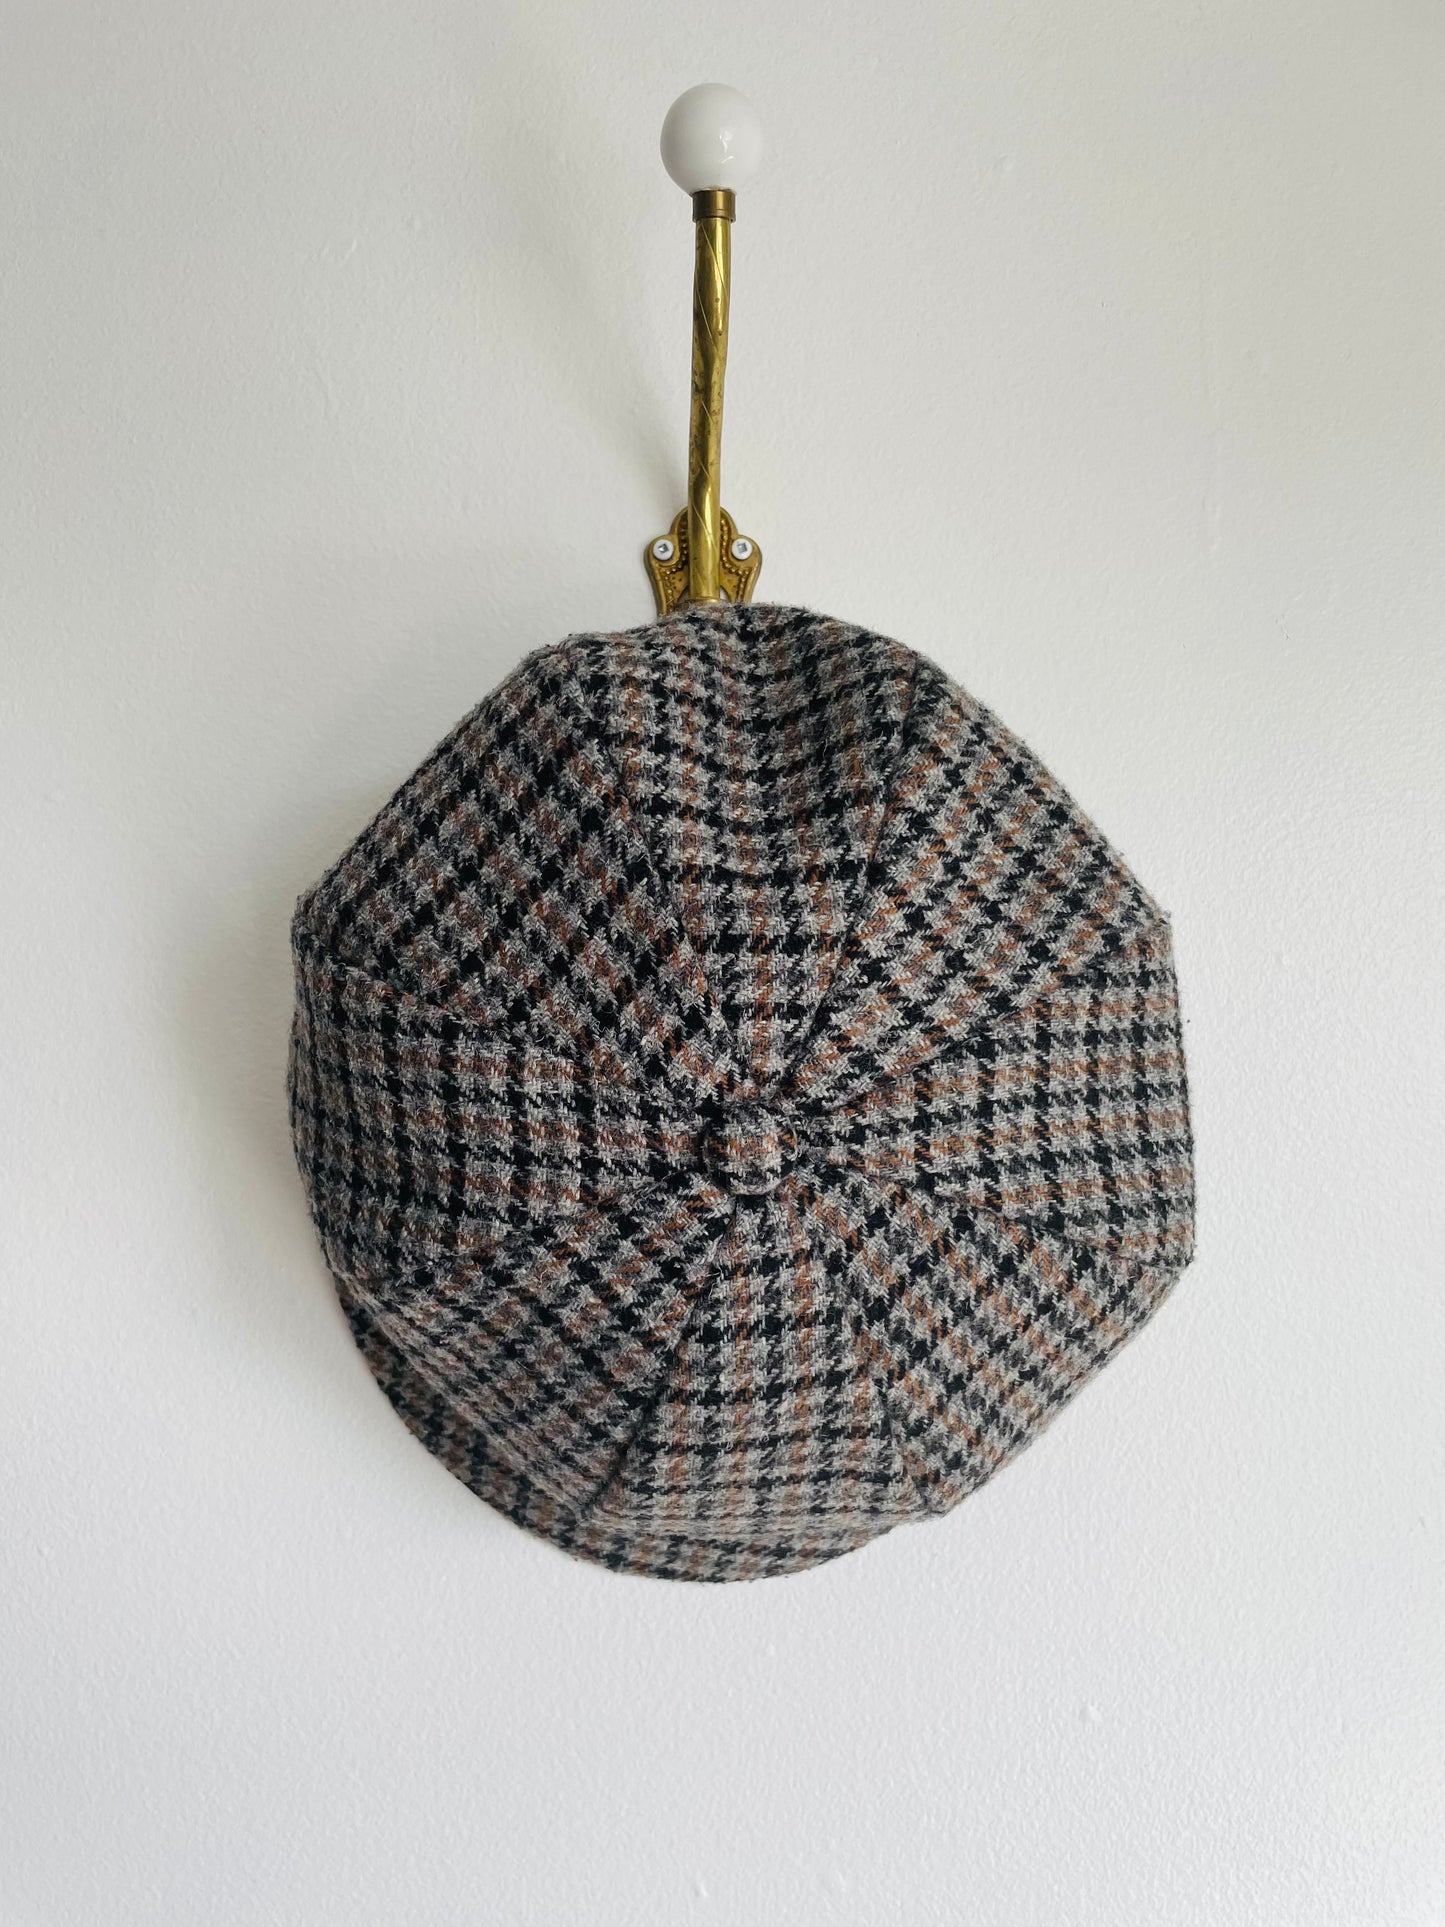 Wool Blend Irish Tweed Headmaster, Shepherd, or Paper Boy Flat Cap Hat - Made in Canada